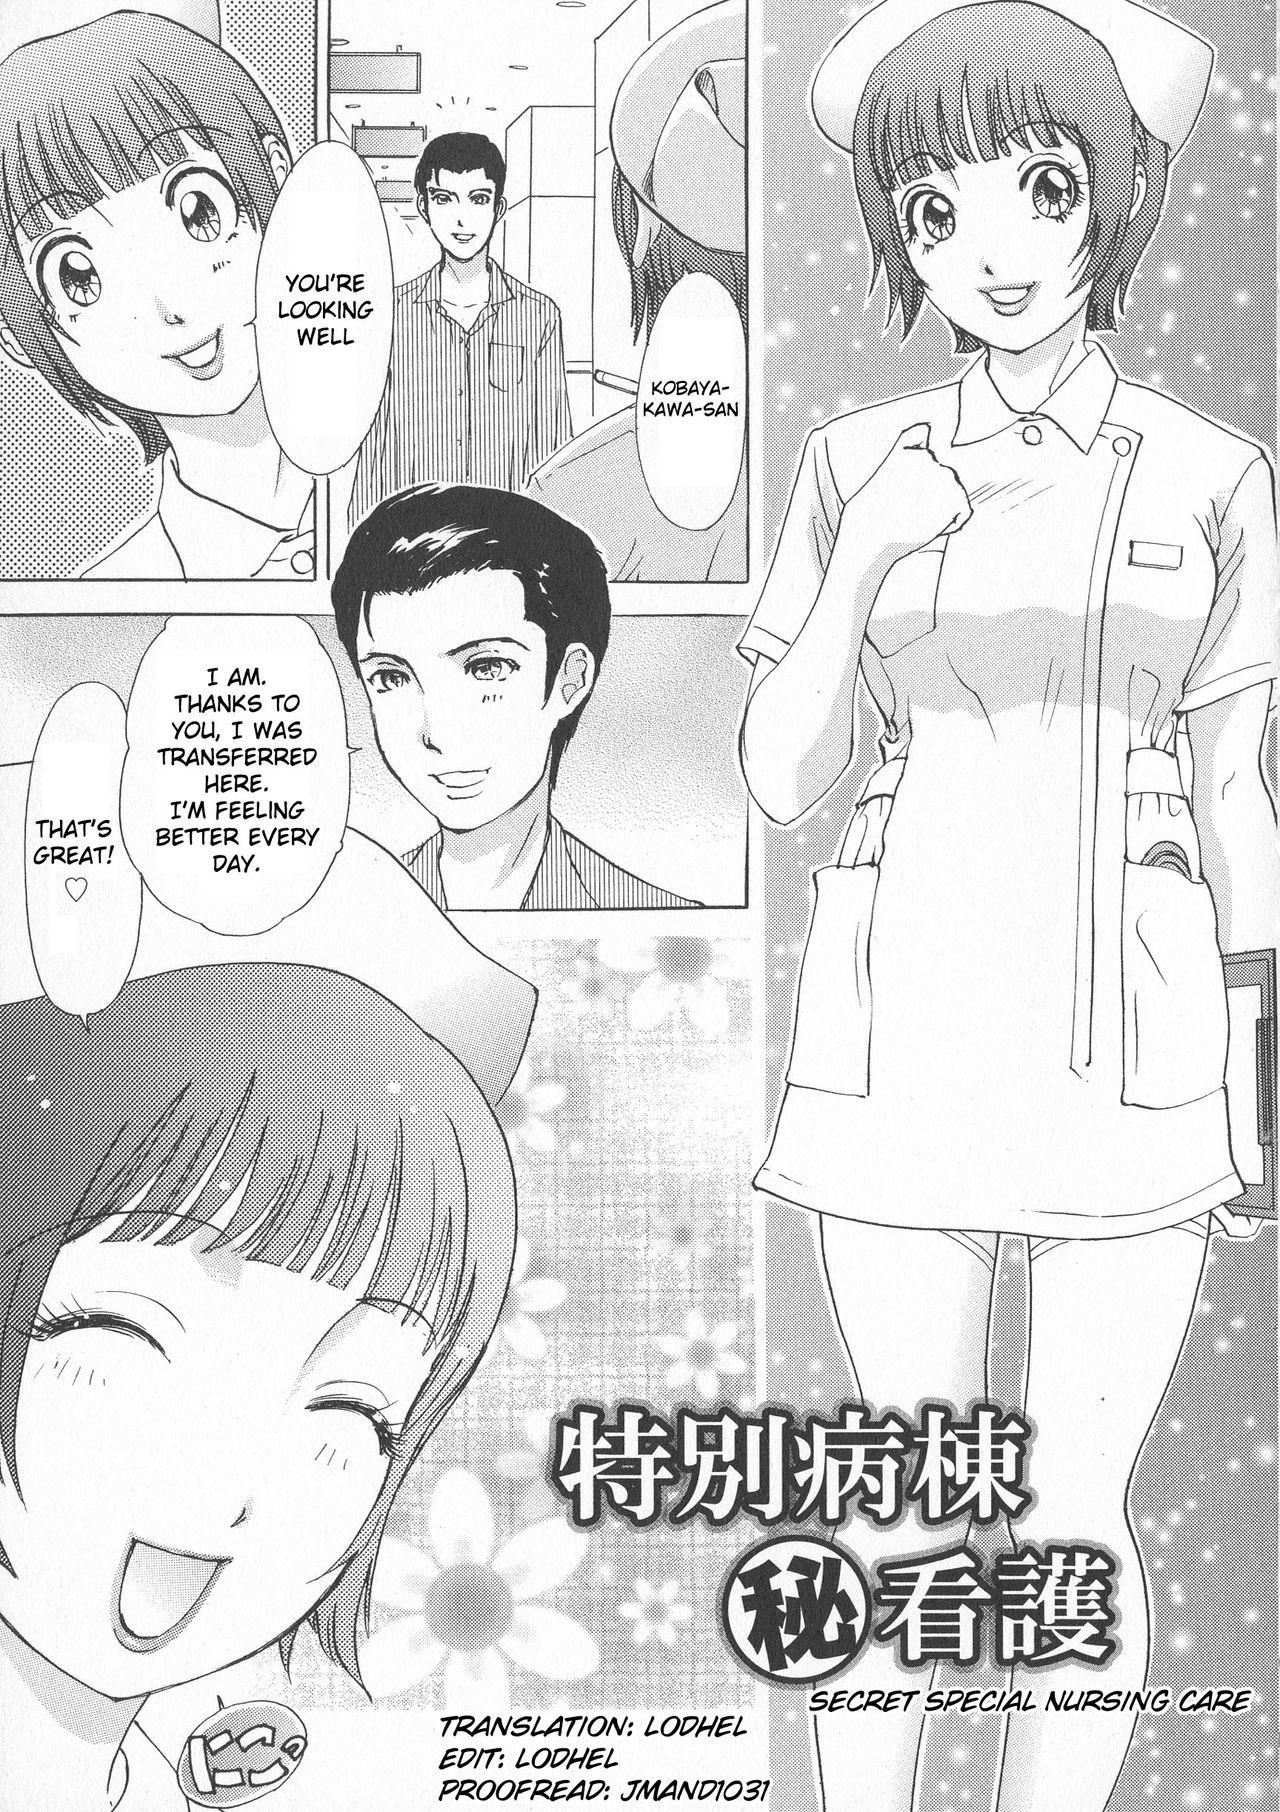 Femboy Tokubetsu byoutou hi kango | Secret Special Nursing Care Ex Girlfriends - Picture 1